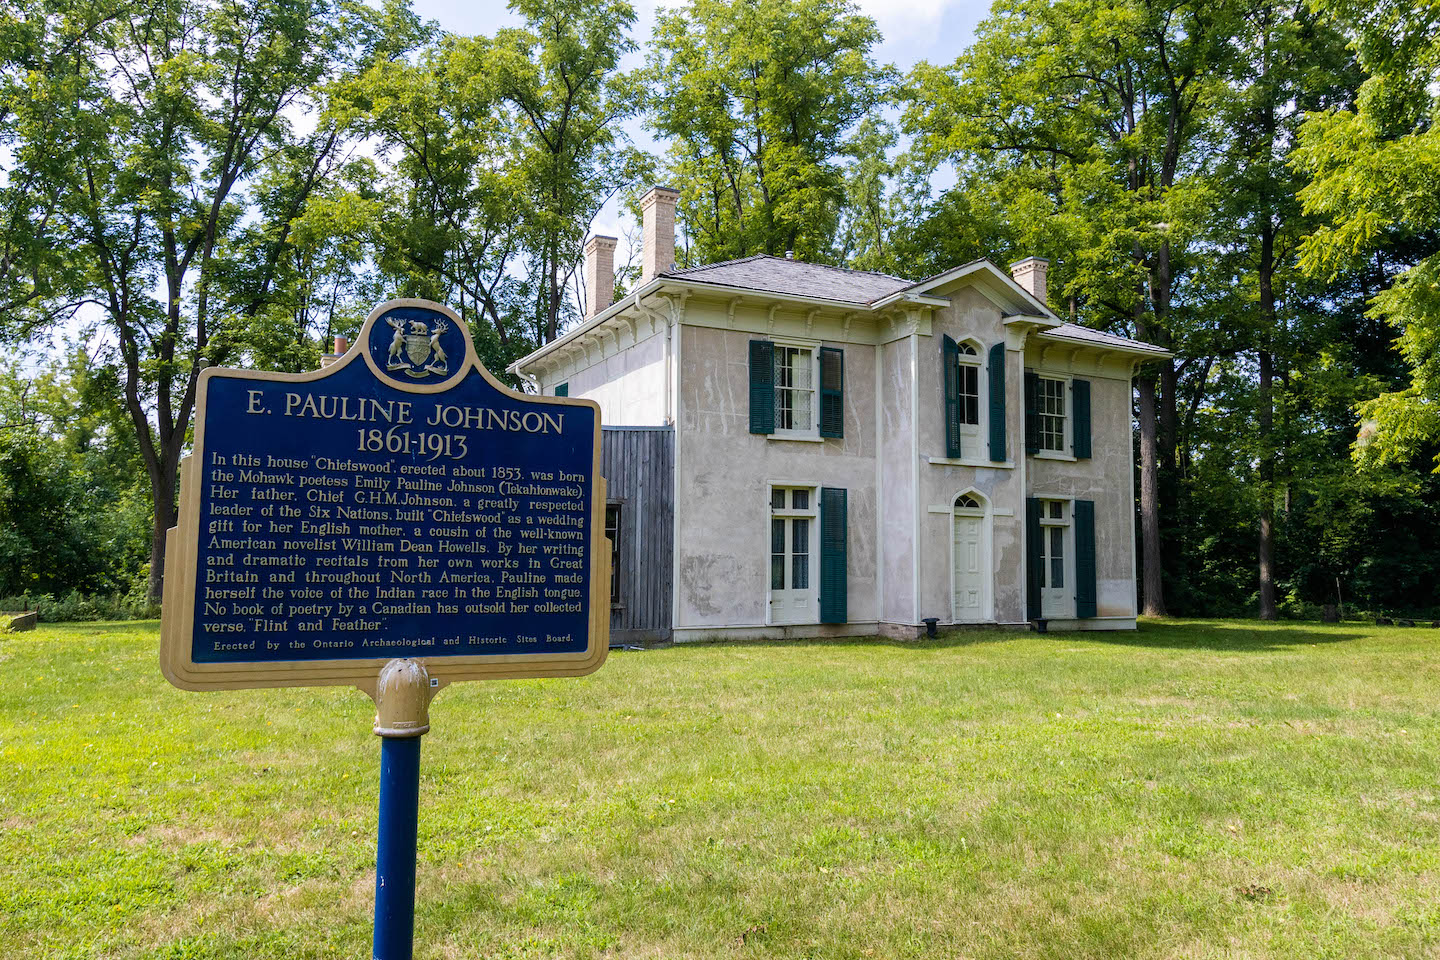 The Childhood Home of Poetess E. Pauline Johnson